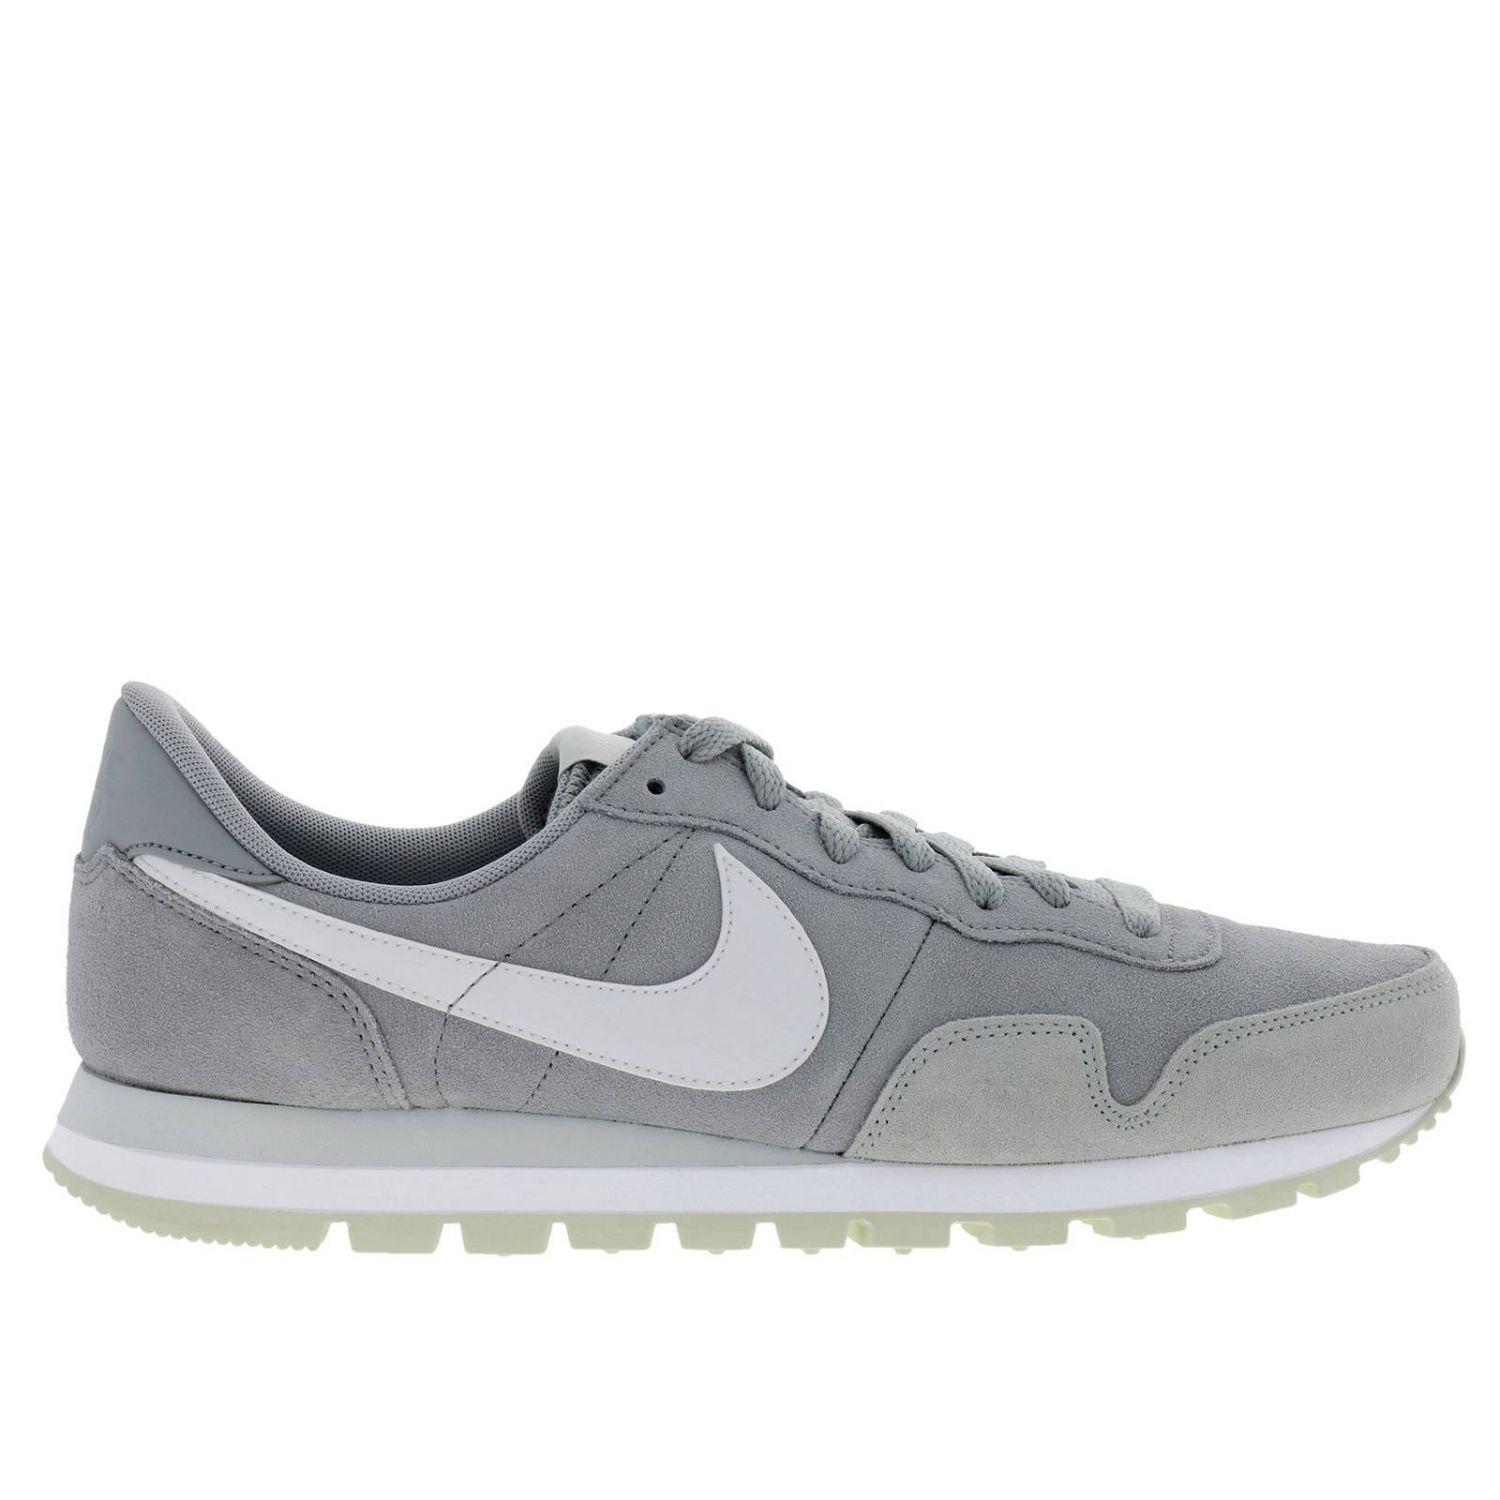 Nike Sneakers Men in Grey (Gray) for Men - Lyst